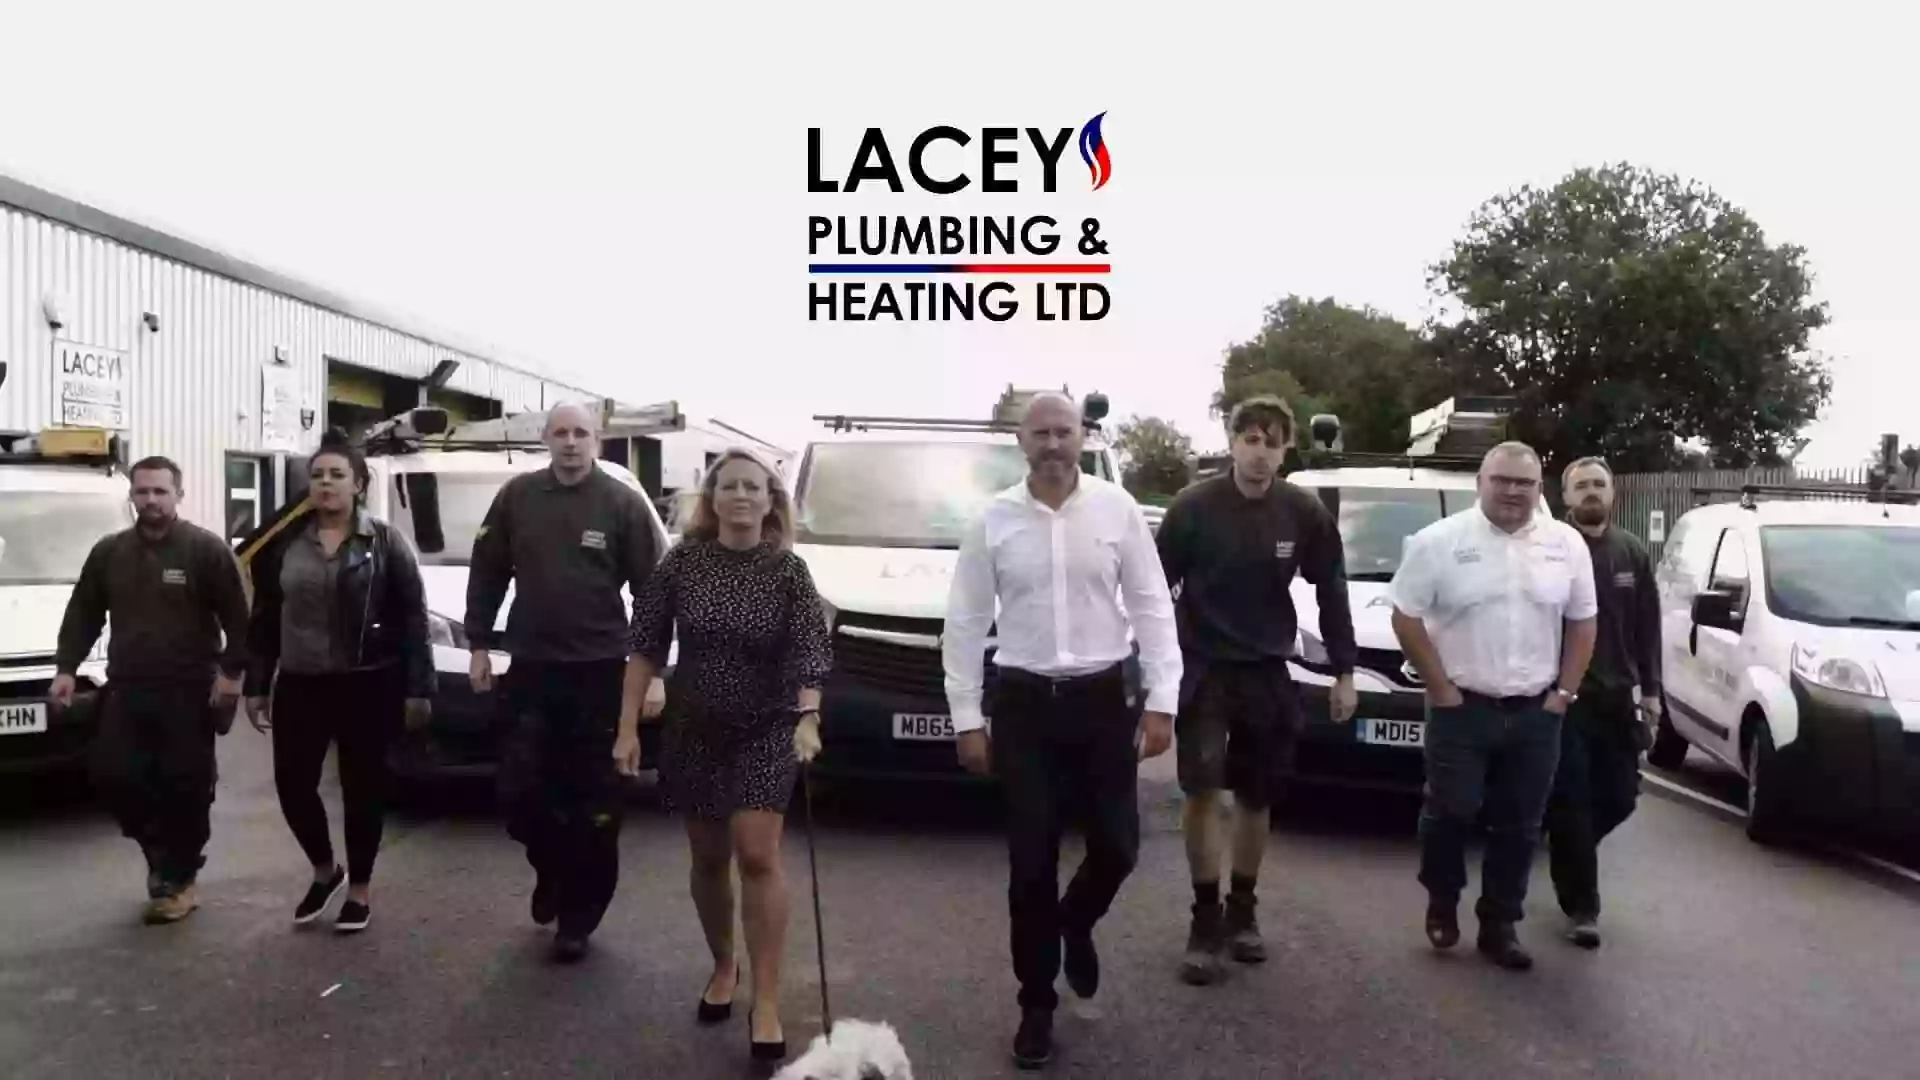 Lacey Plumbing & Heating Ltd